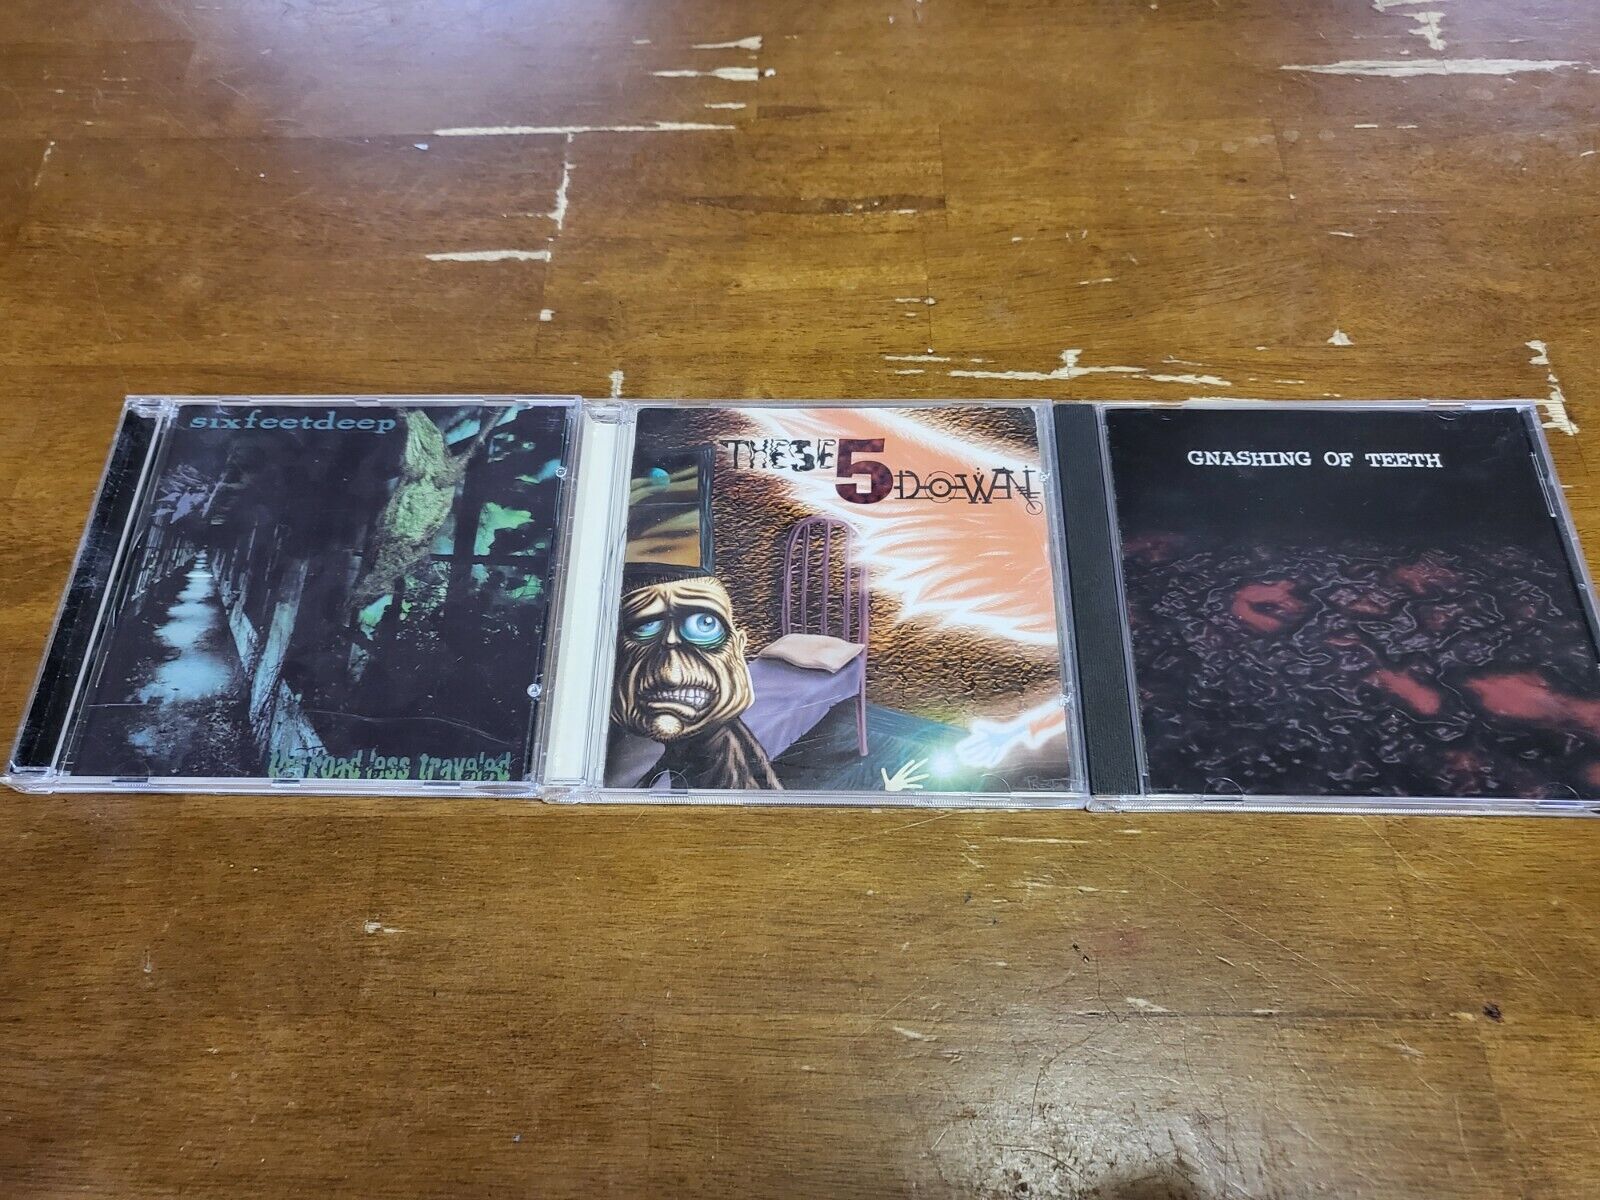 Six Feet Deep/ These 5 Down/ Gnashing of Teeth Rare Christian Metal CD Lot